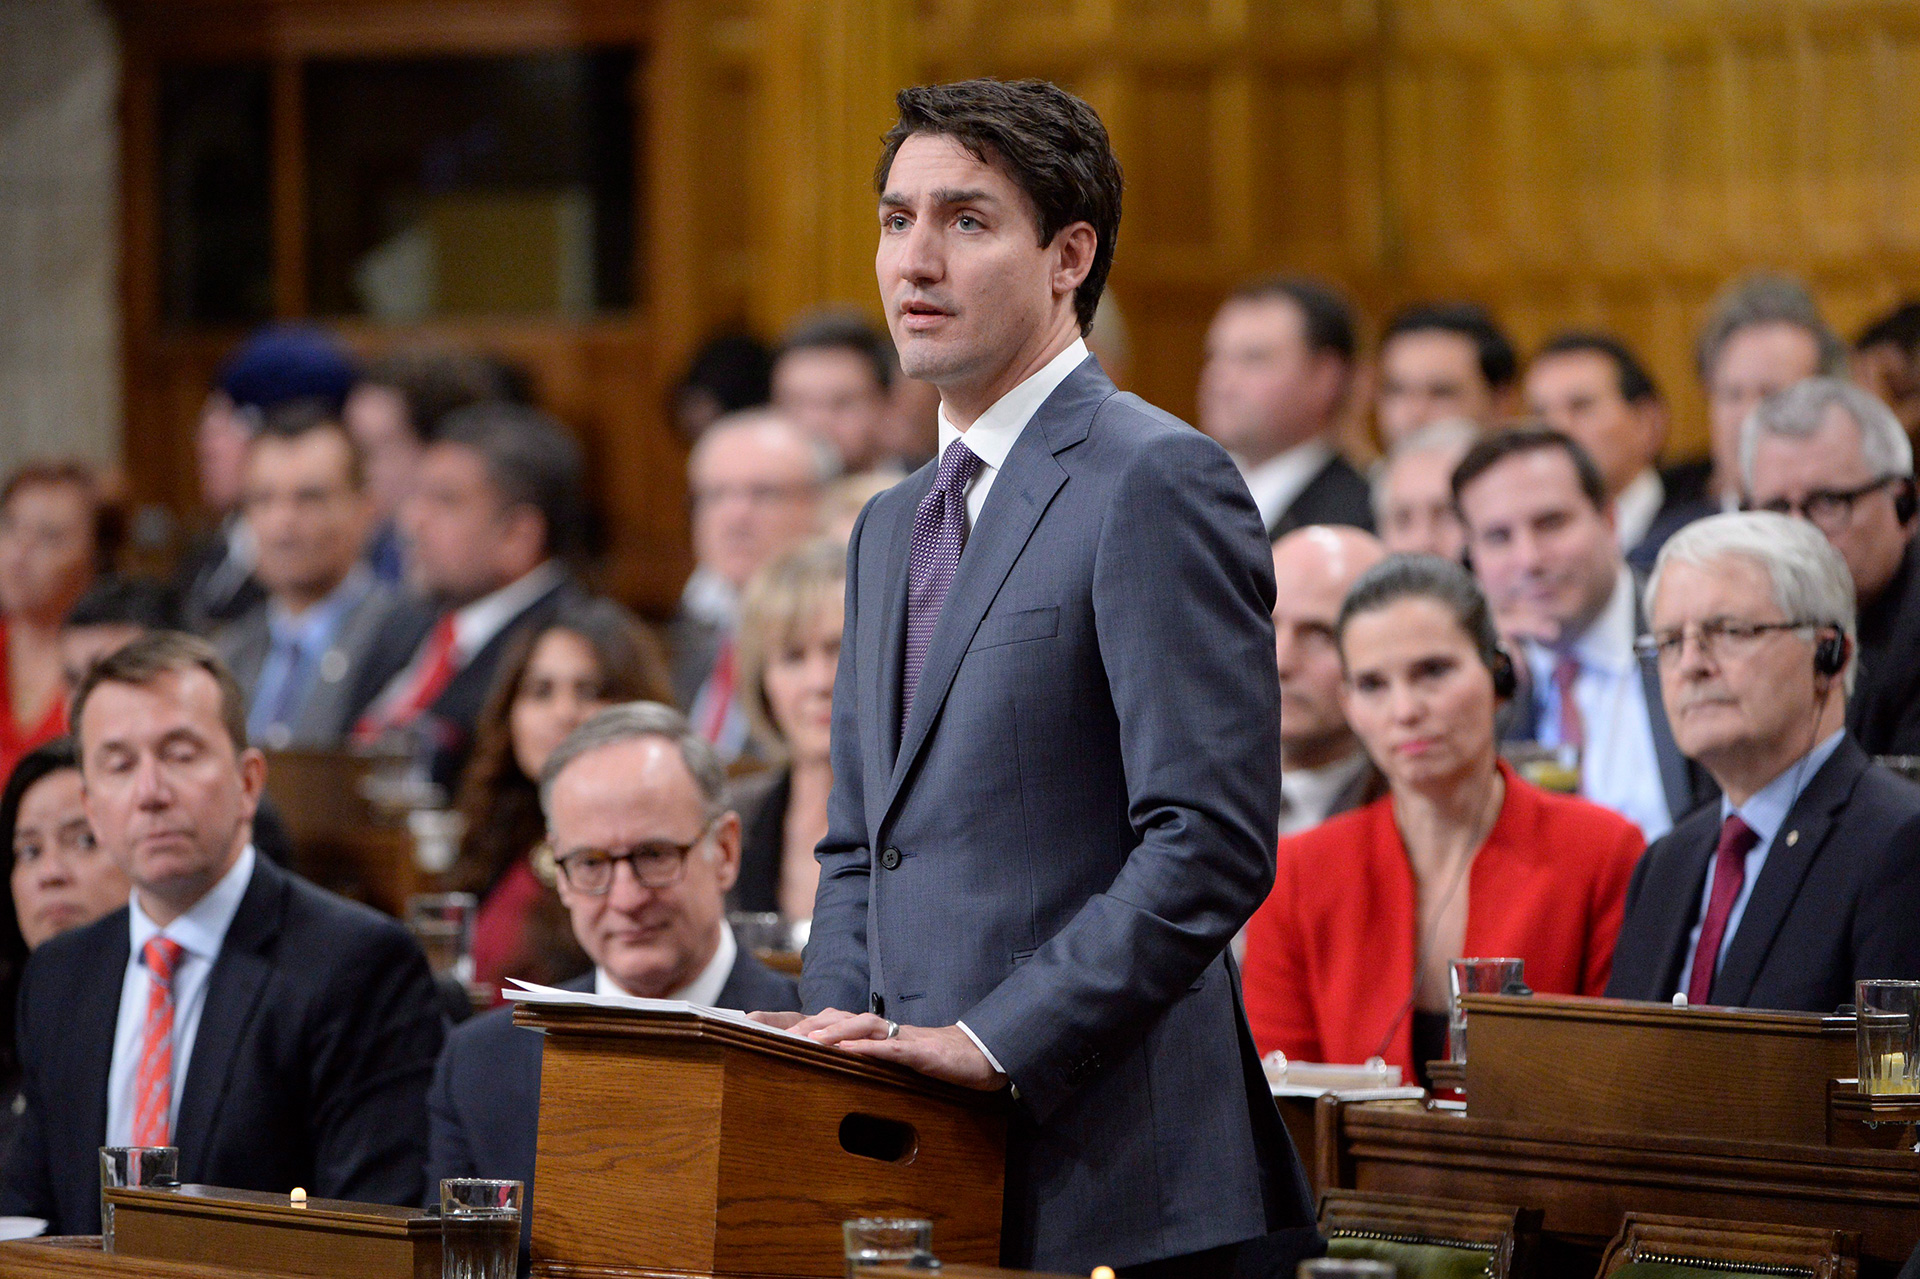 Prime Minister Justin Trudeau speaking at a podium.